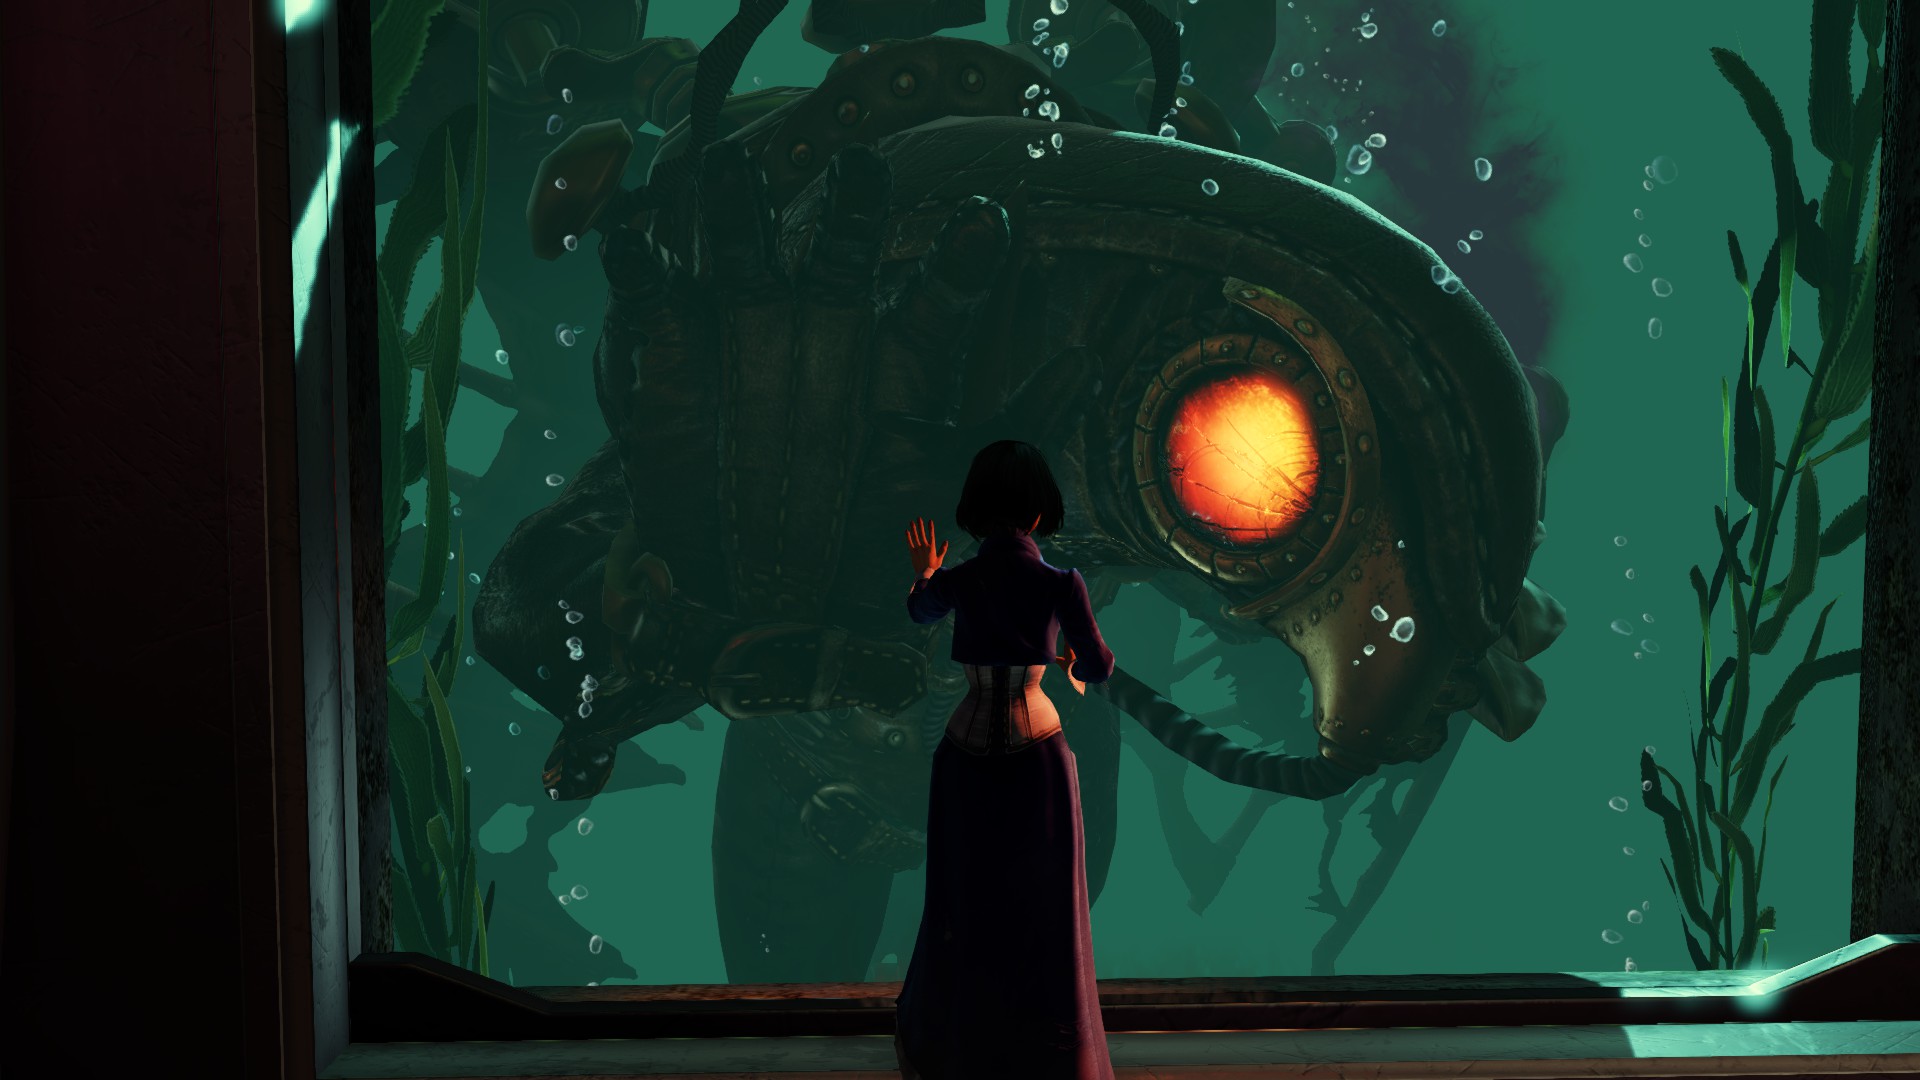 Bioshock Infinite: Burial at Sea by AcerSense on DeviantArt